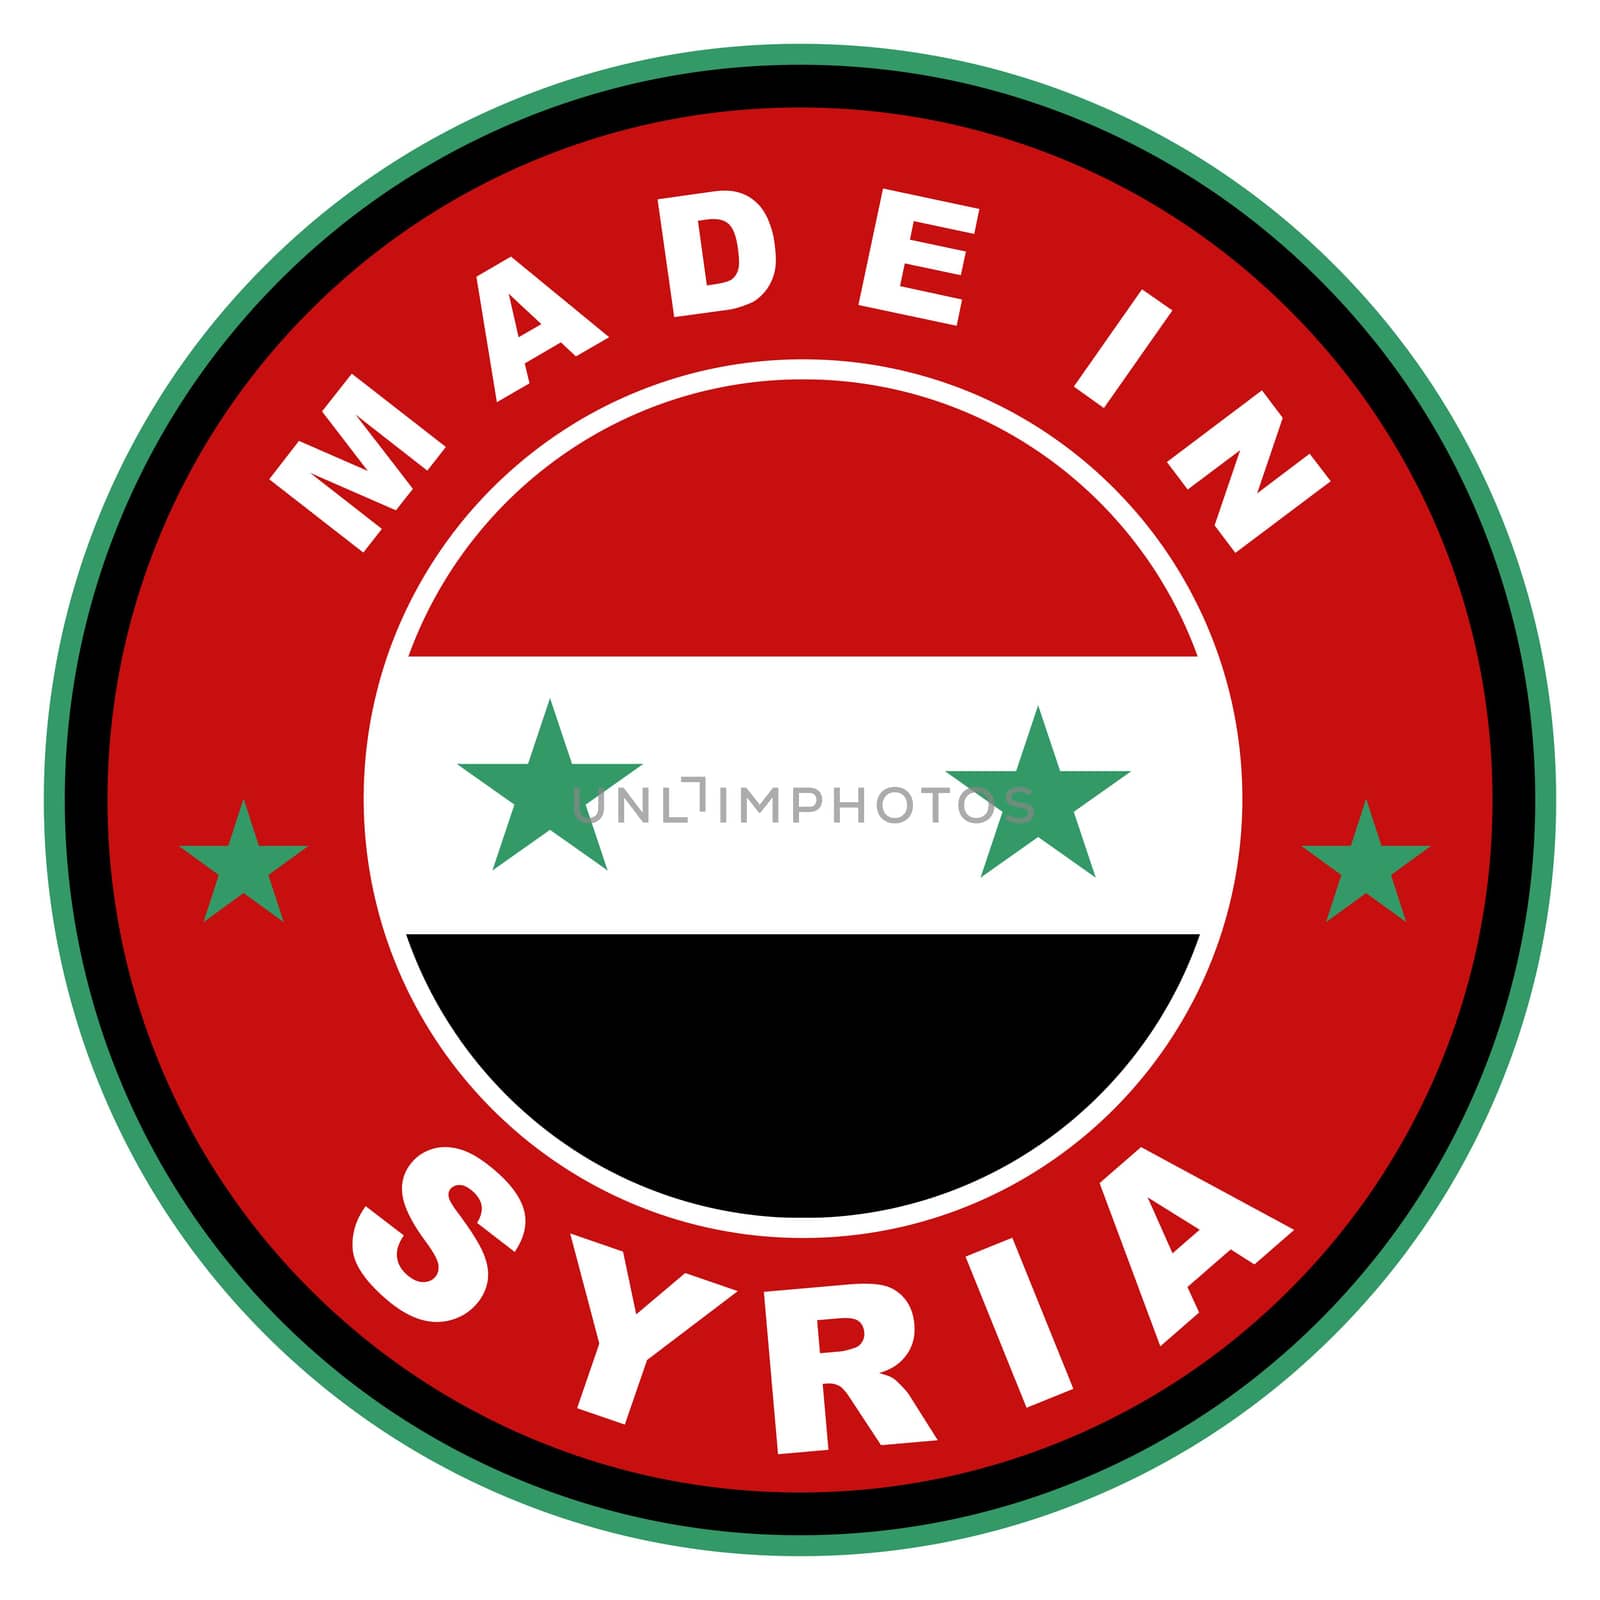 made in syria by tony4urban